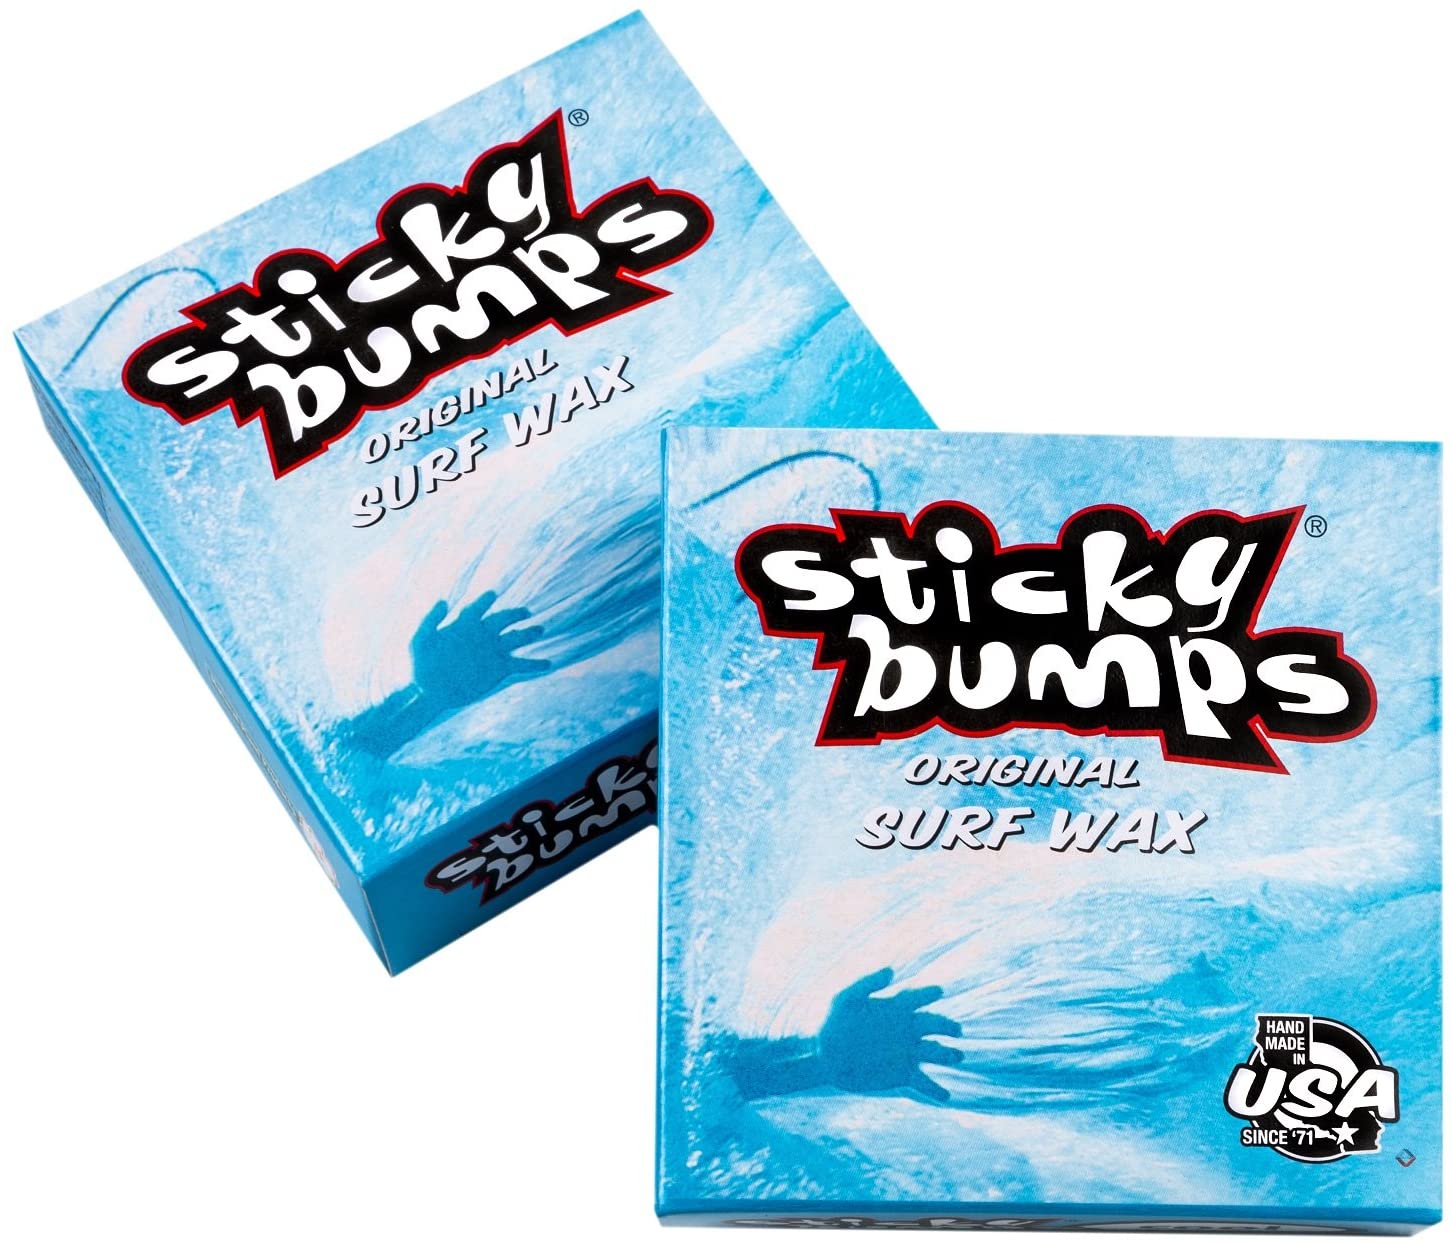 Sticky Bumps surf wax